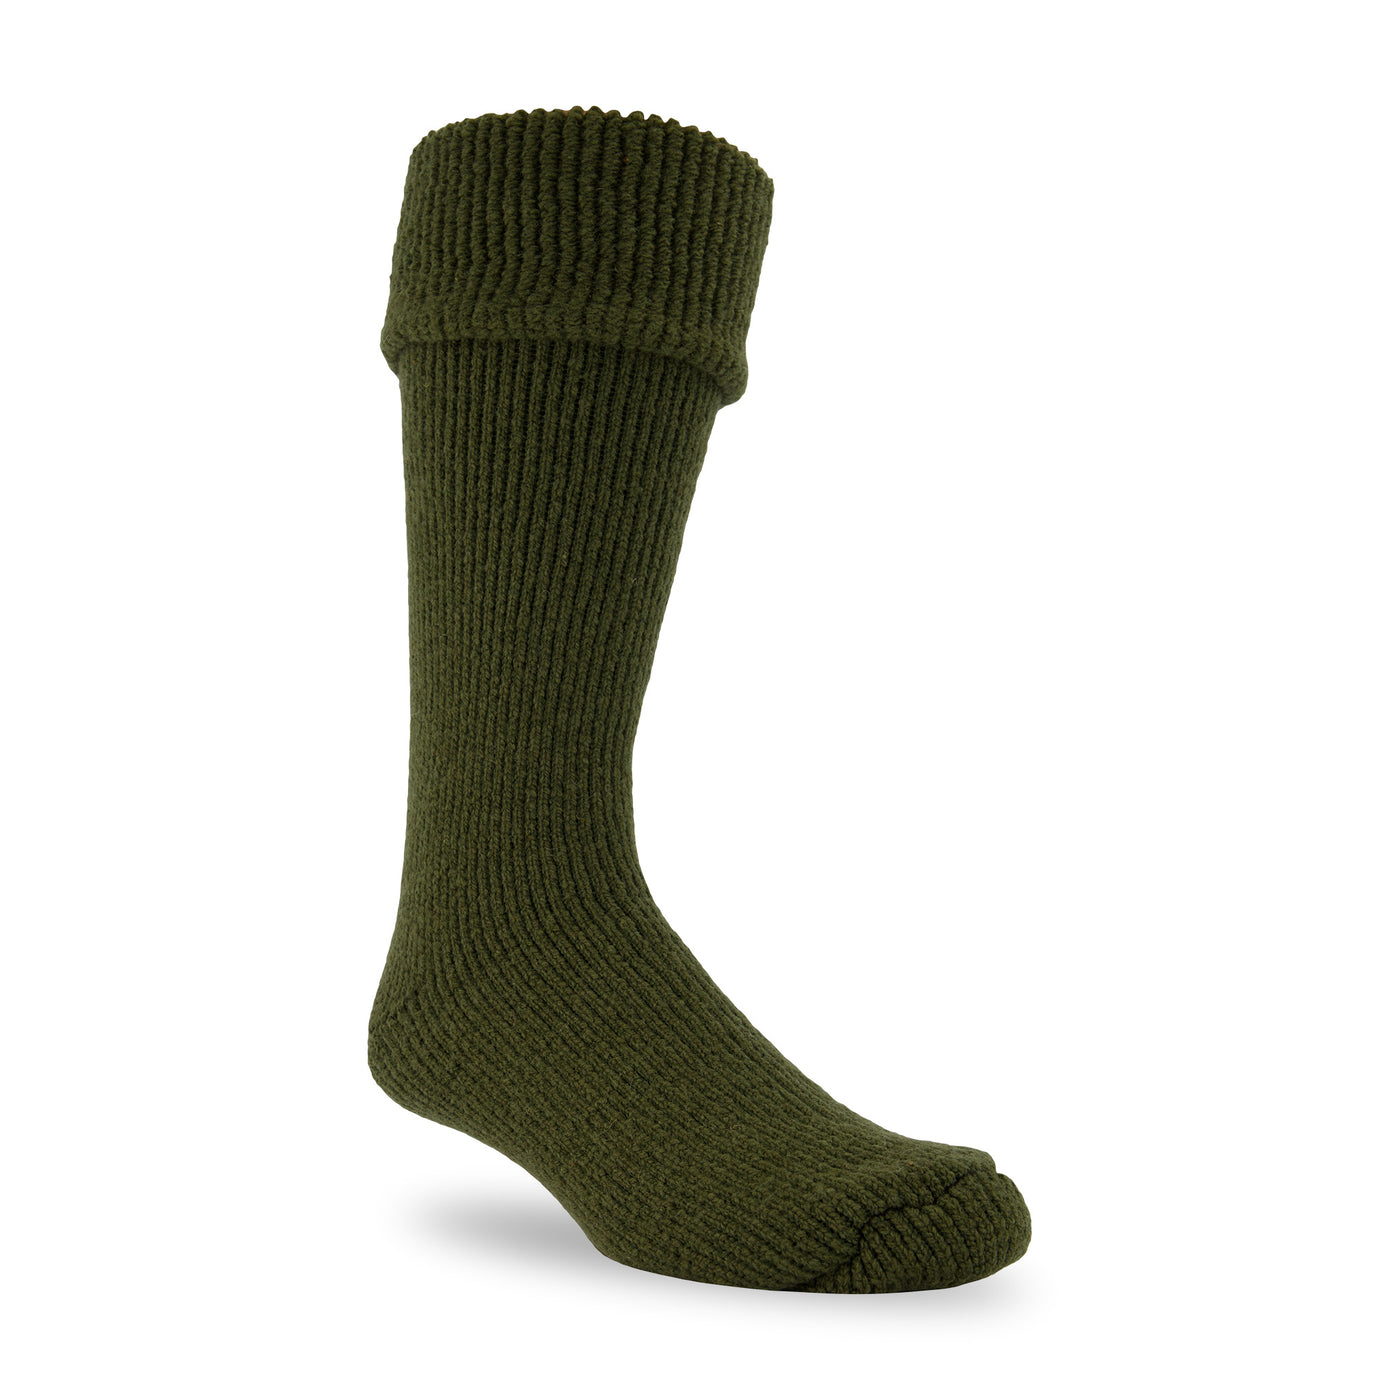  Green Thermal Socks